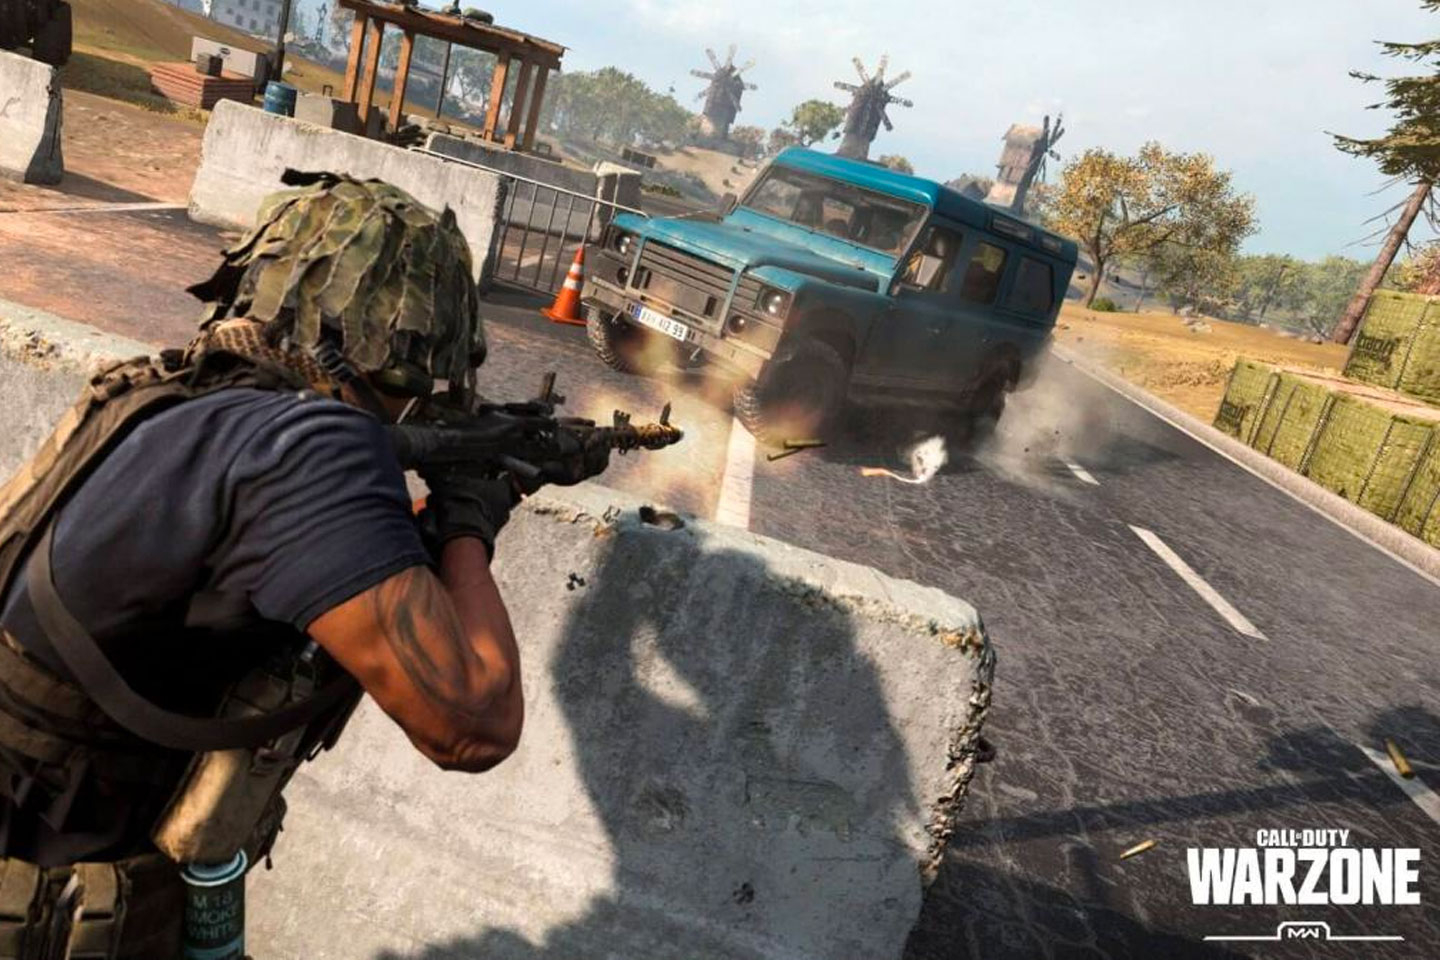 Call of Duty Warzone high quality screenshot